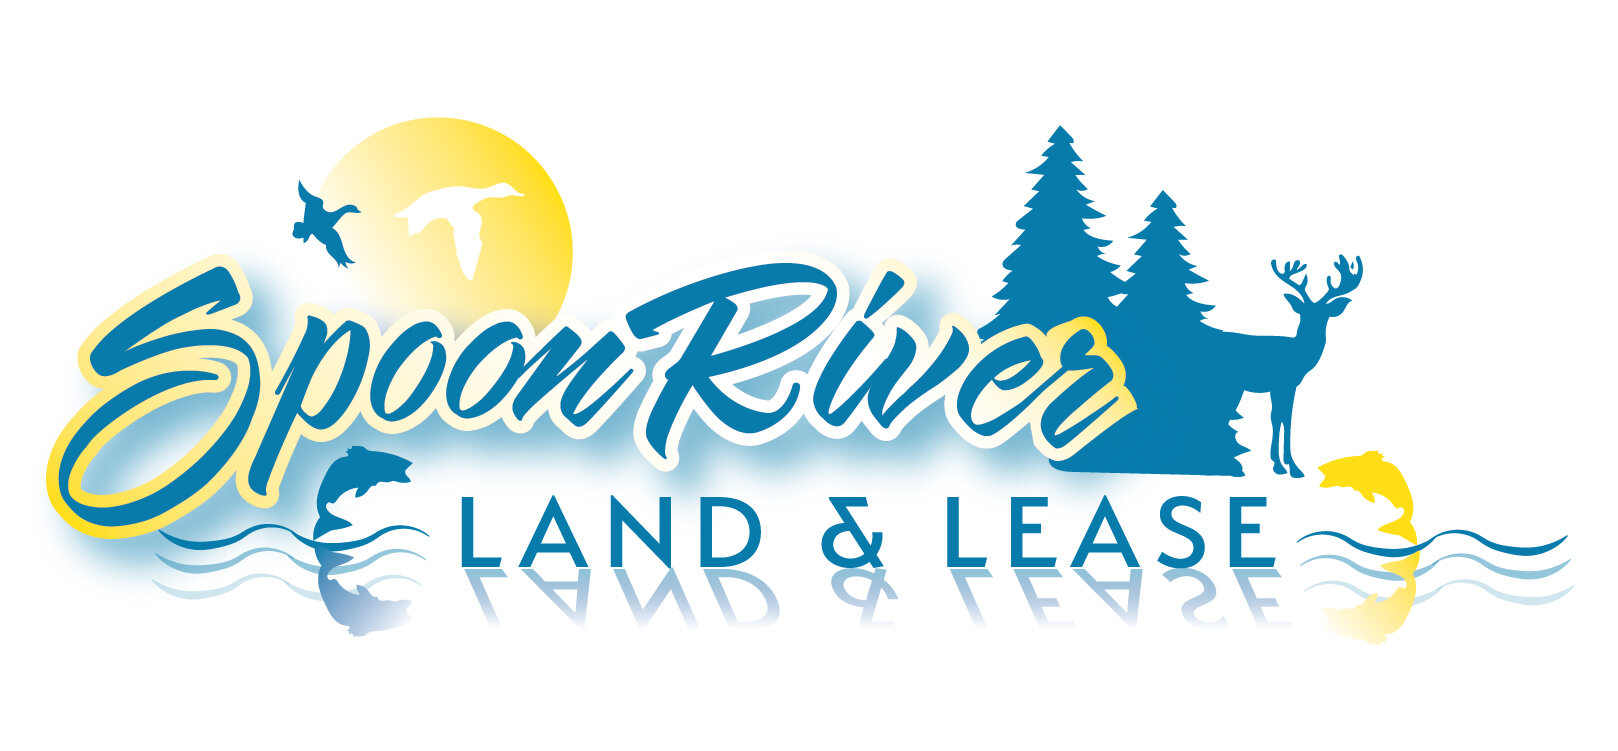 Spoon River Land & Lease Logo Design